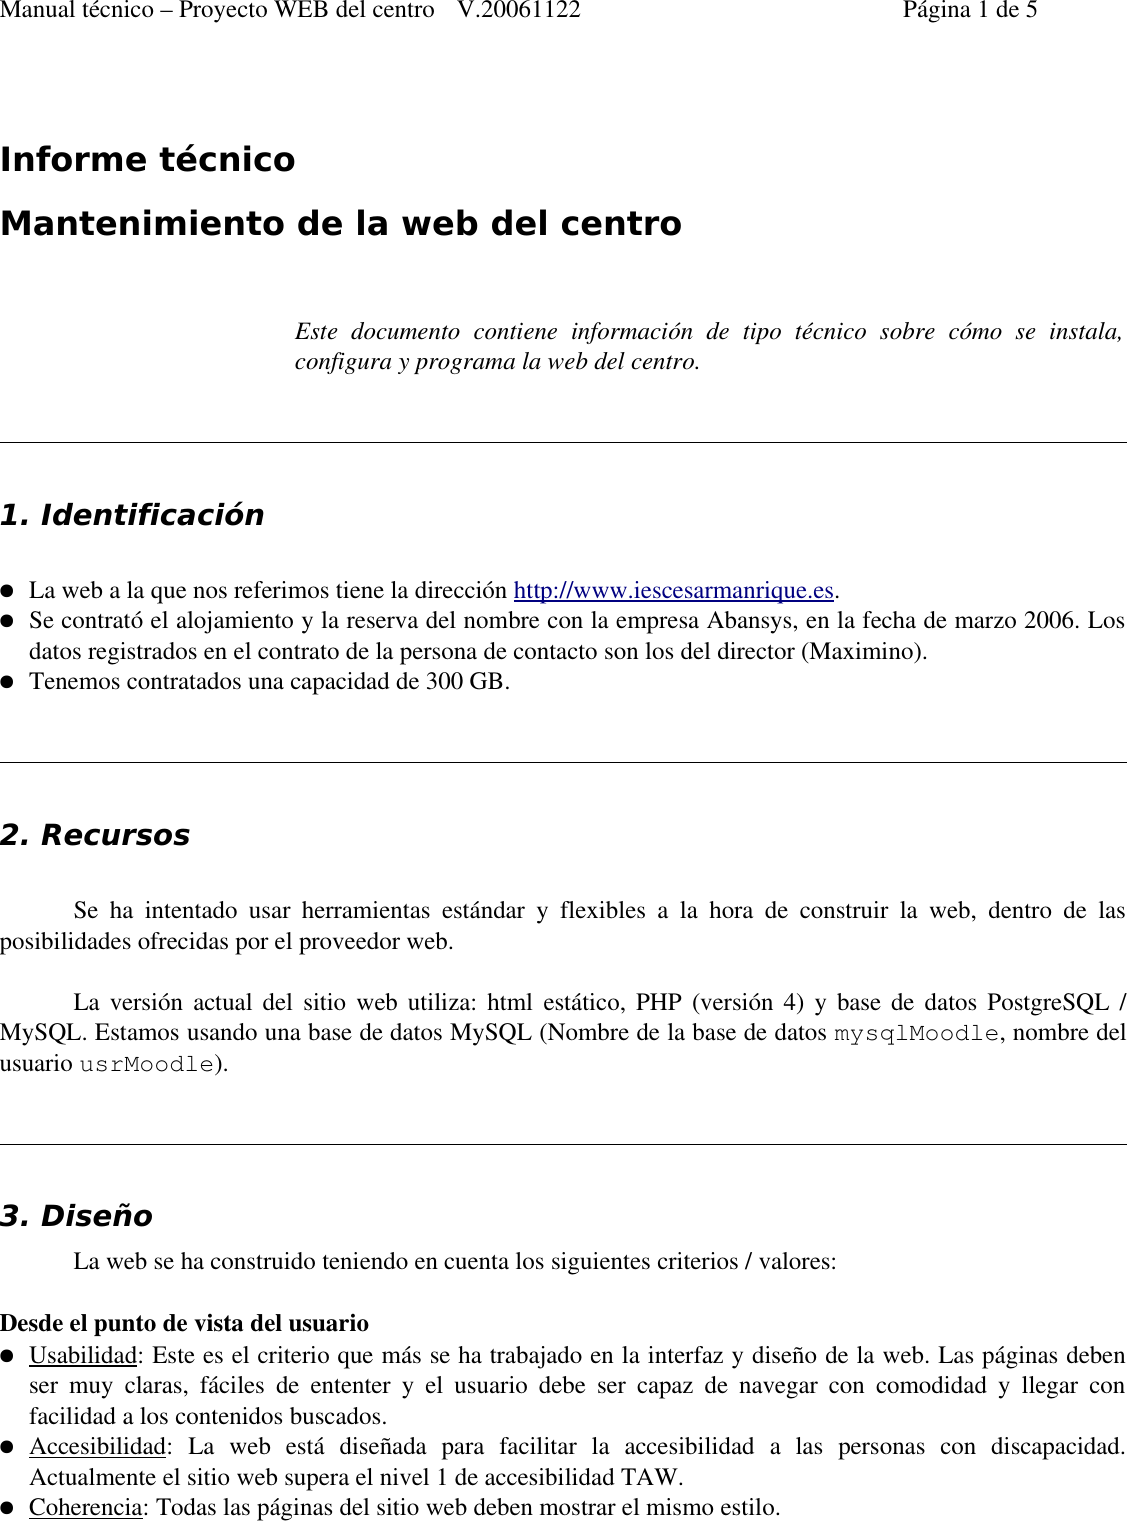 Page 1 of 5 - Manual Tecnico Web